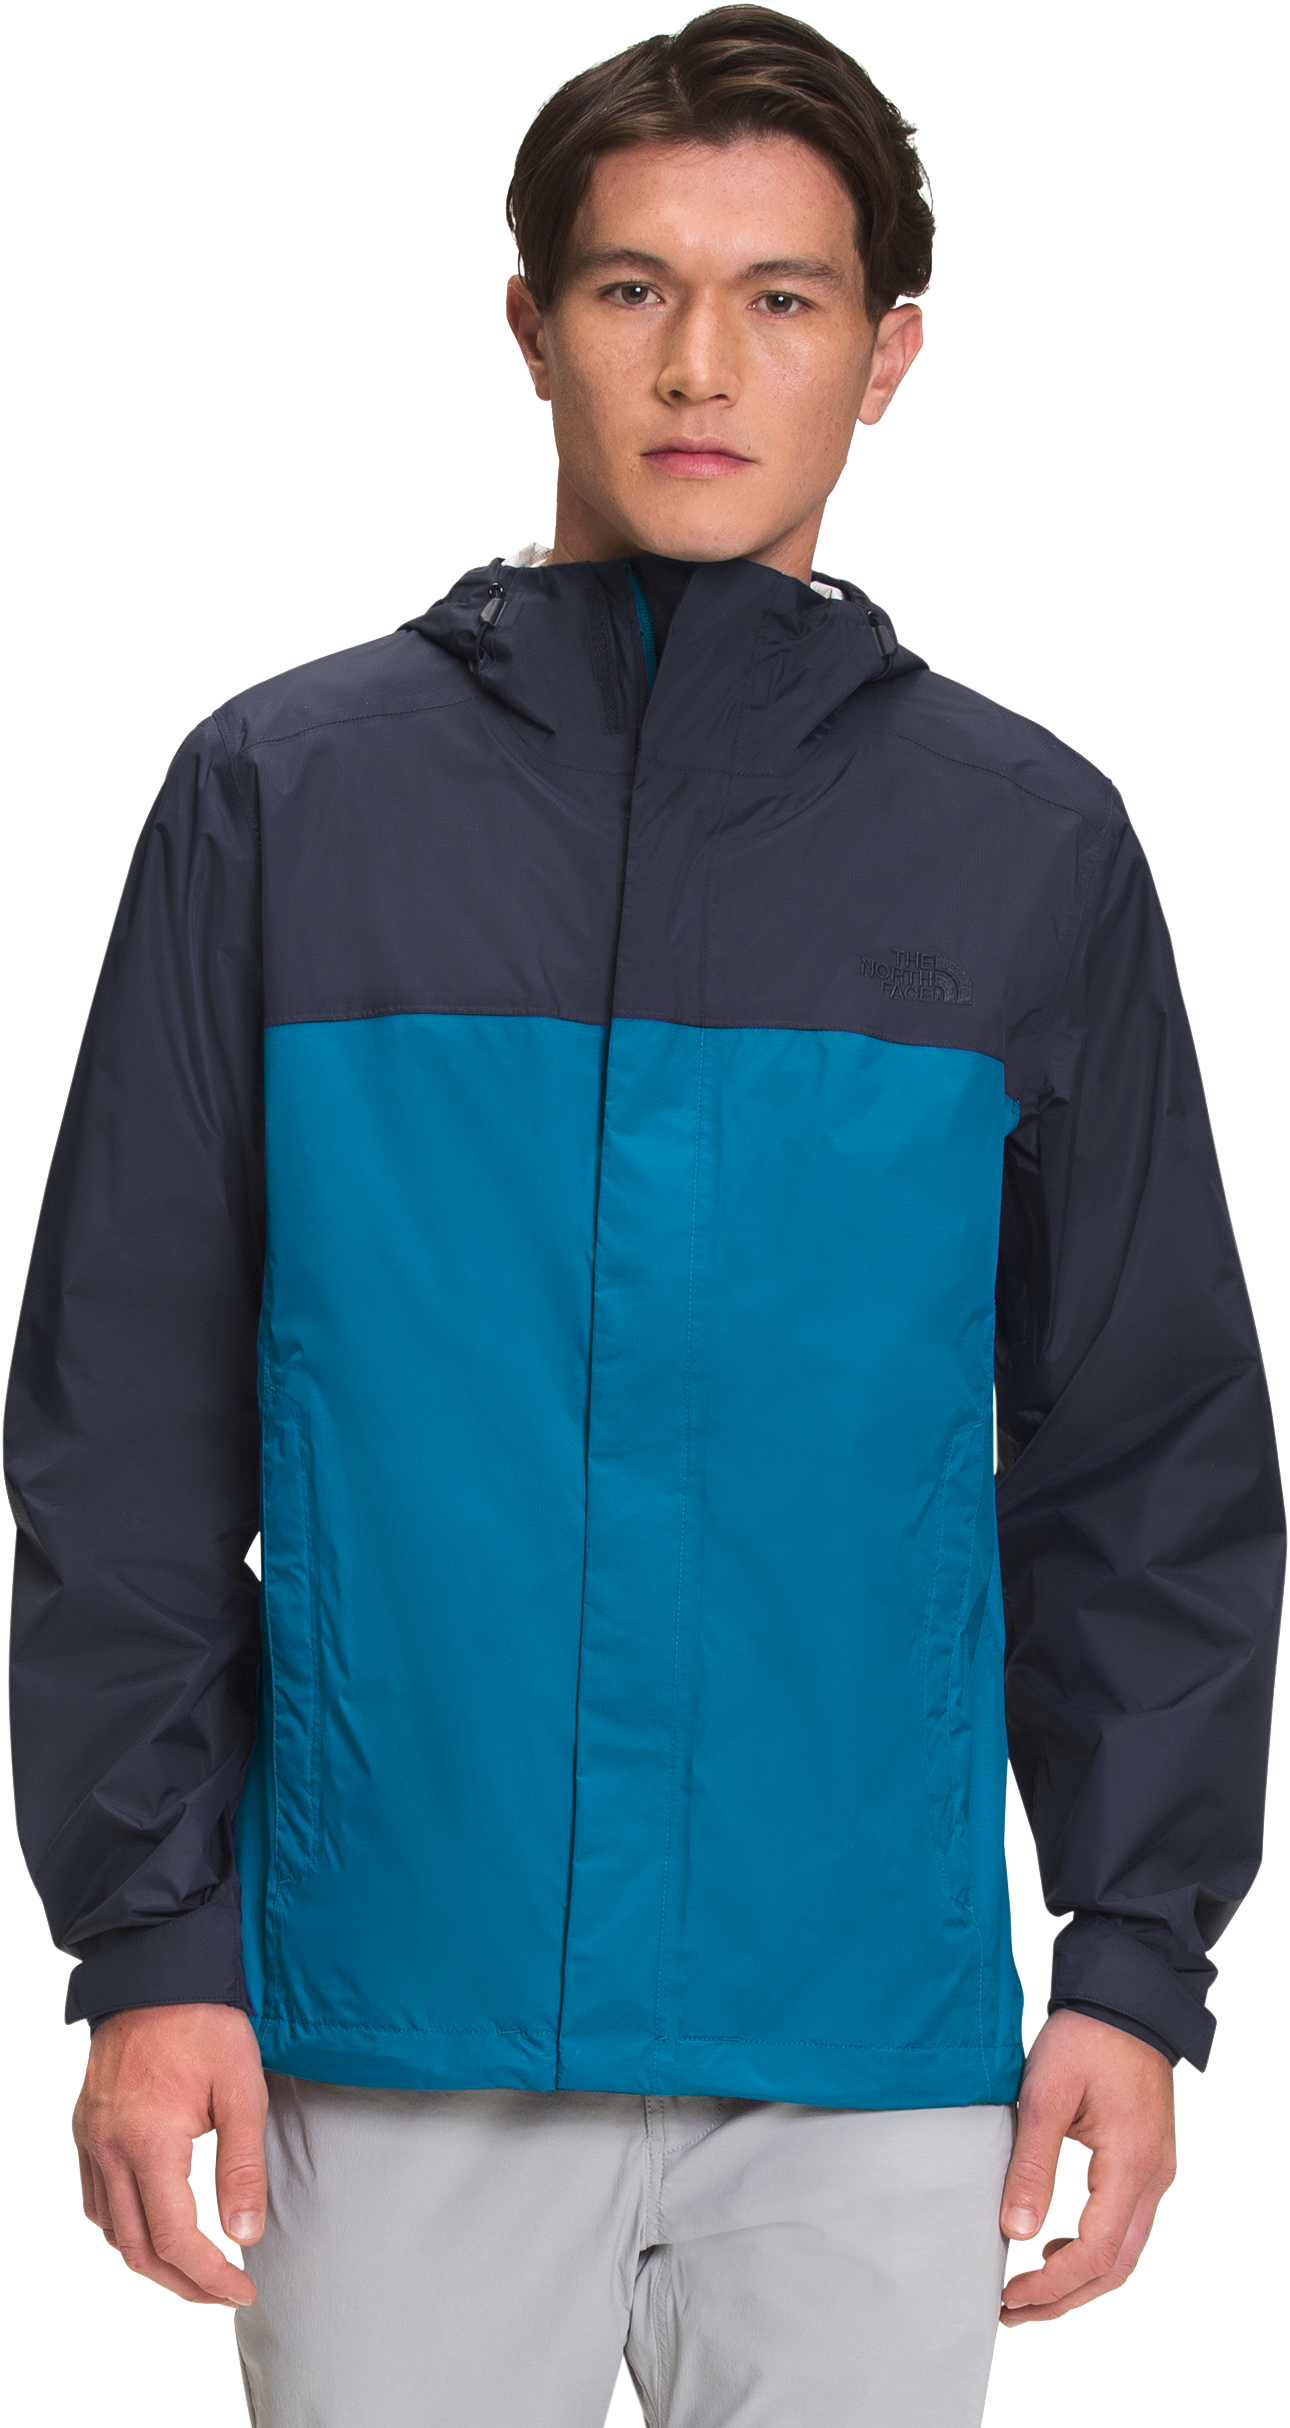 The North Face Venture 2 Jacket for Men - Aviator Navy/Banff Blue - 2XL